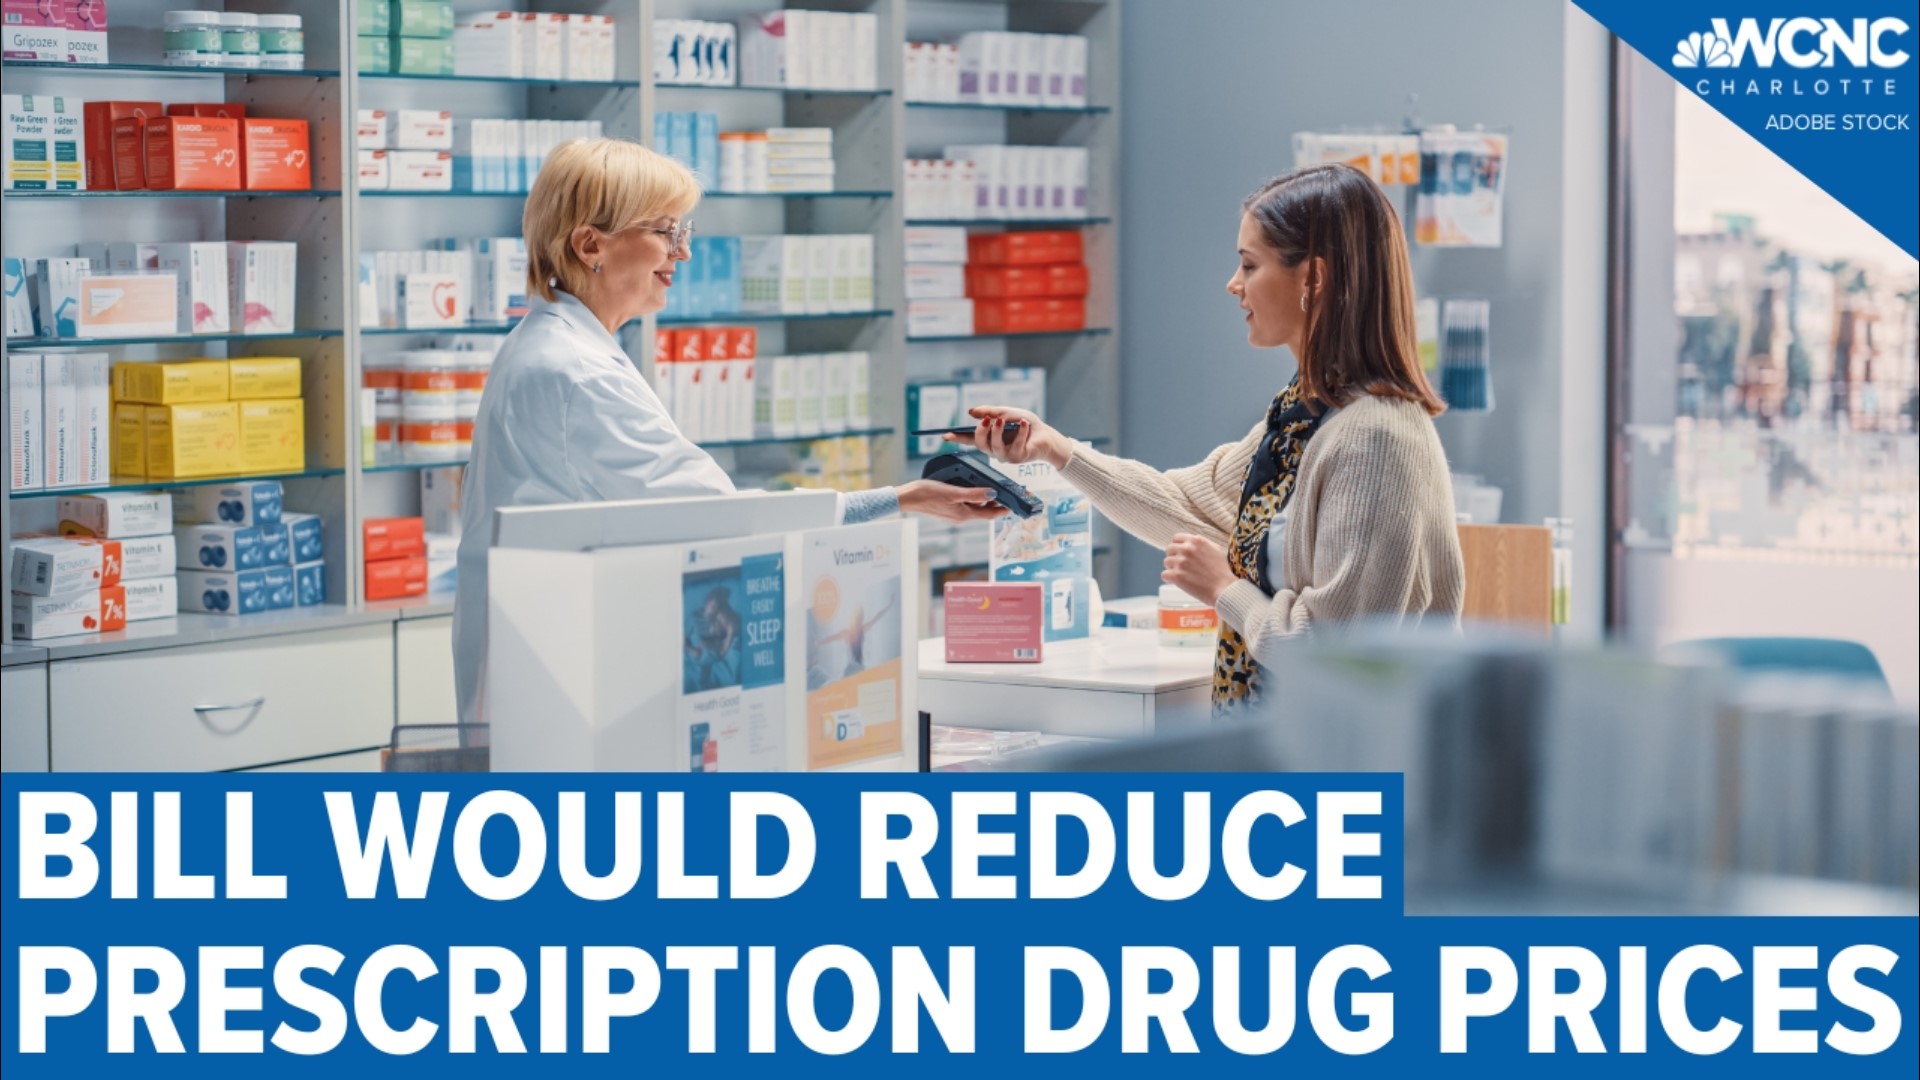 North Carolina Senator Thom Tillis is introducing bipartisan legislation to reduce prescription drug prices for seniors with Medicare.